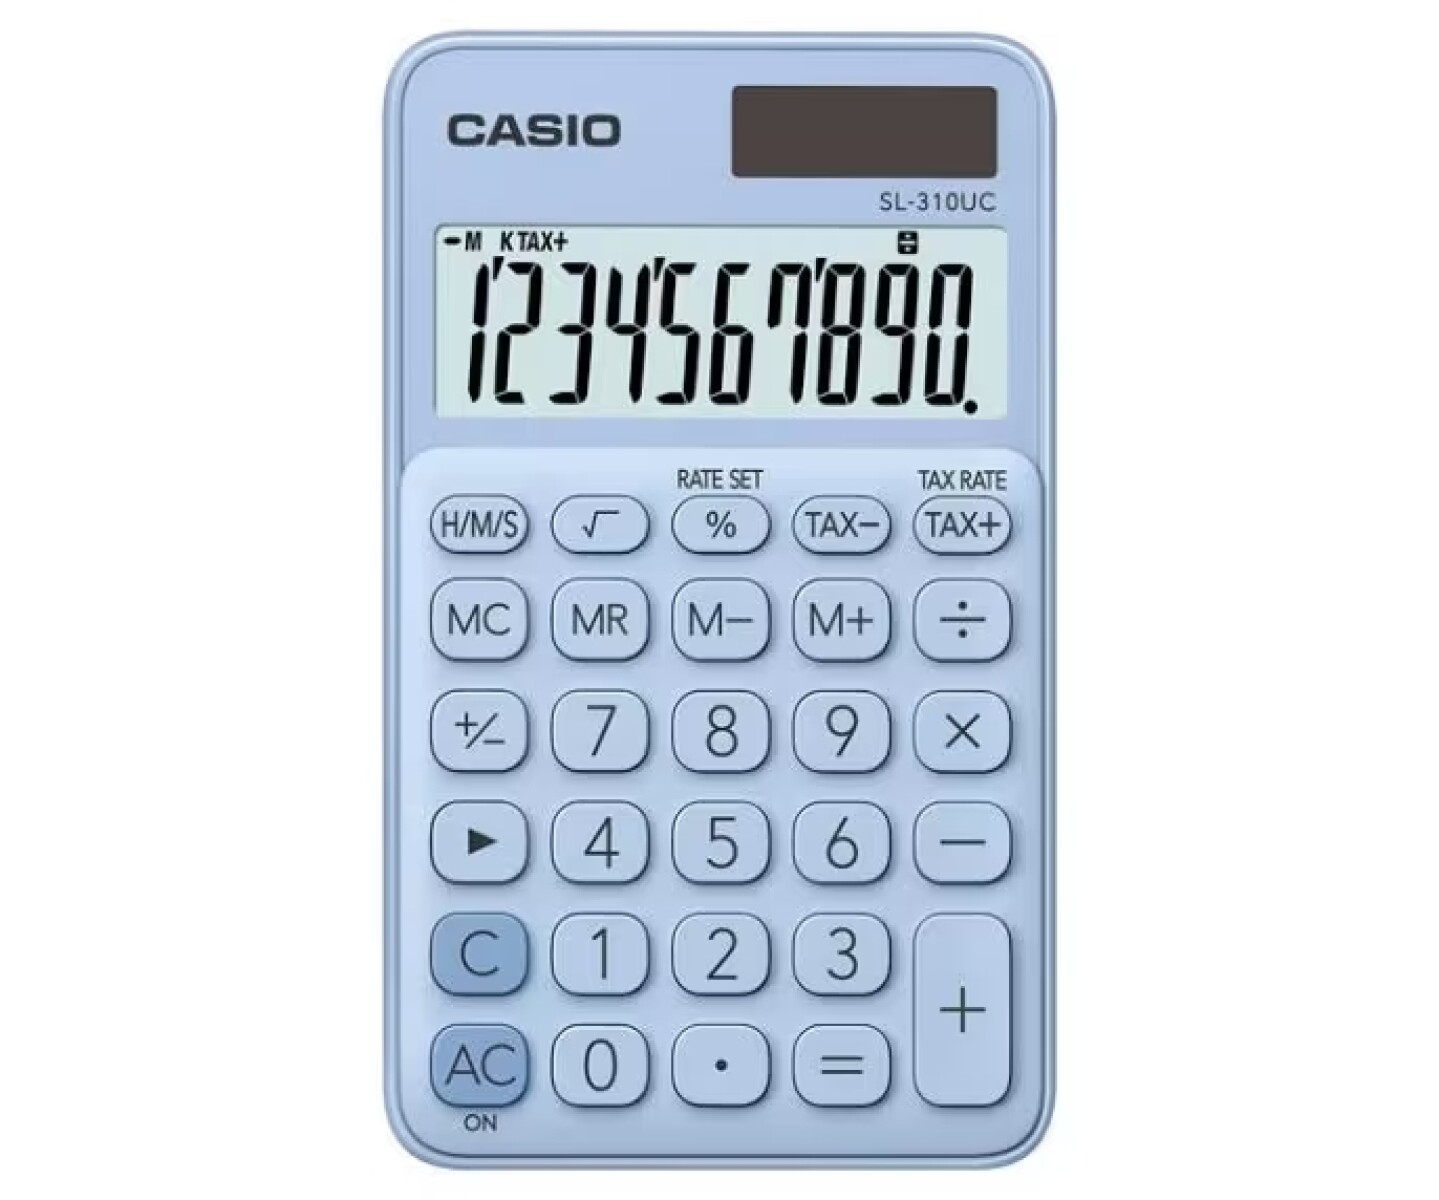 Calculadora Casio SL-310 UC - -LB 